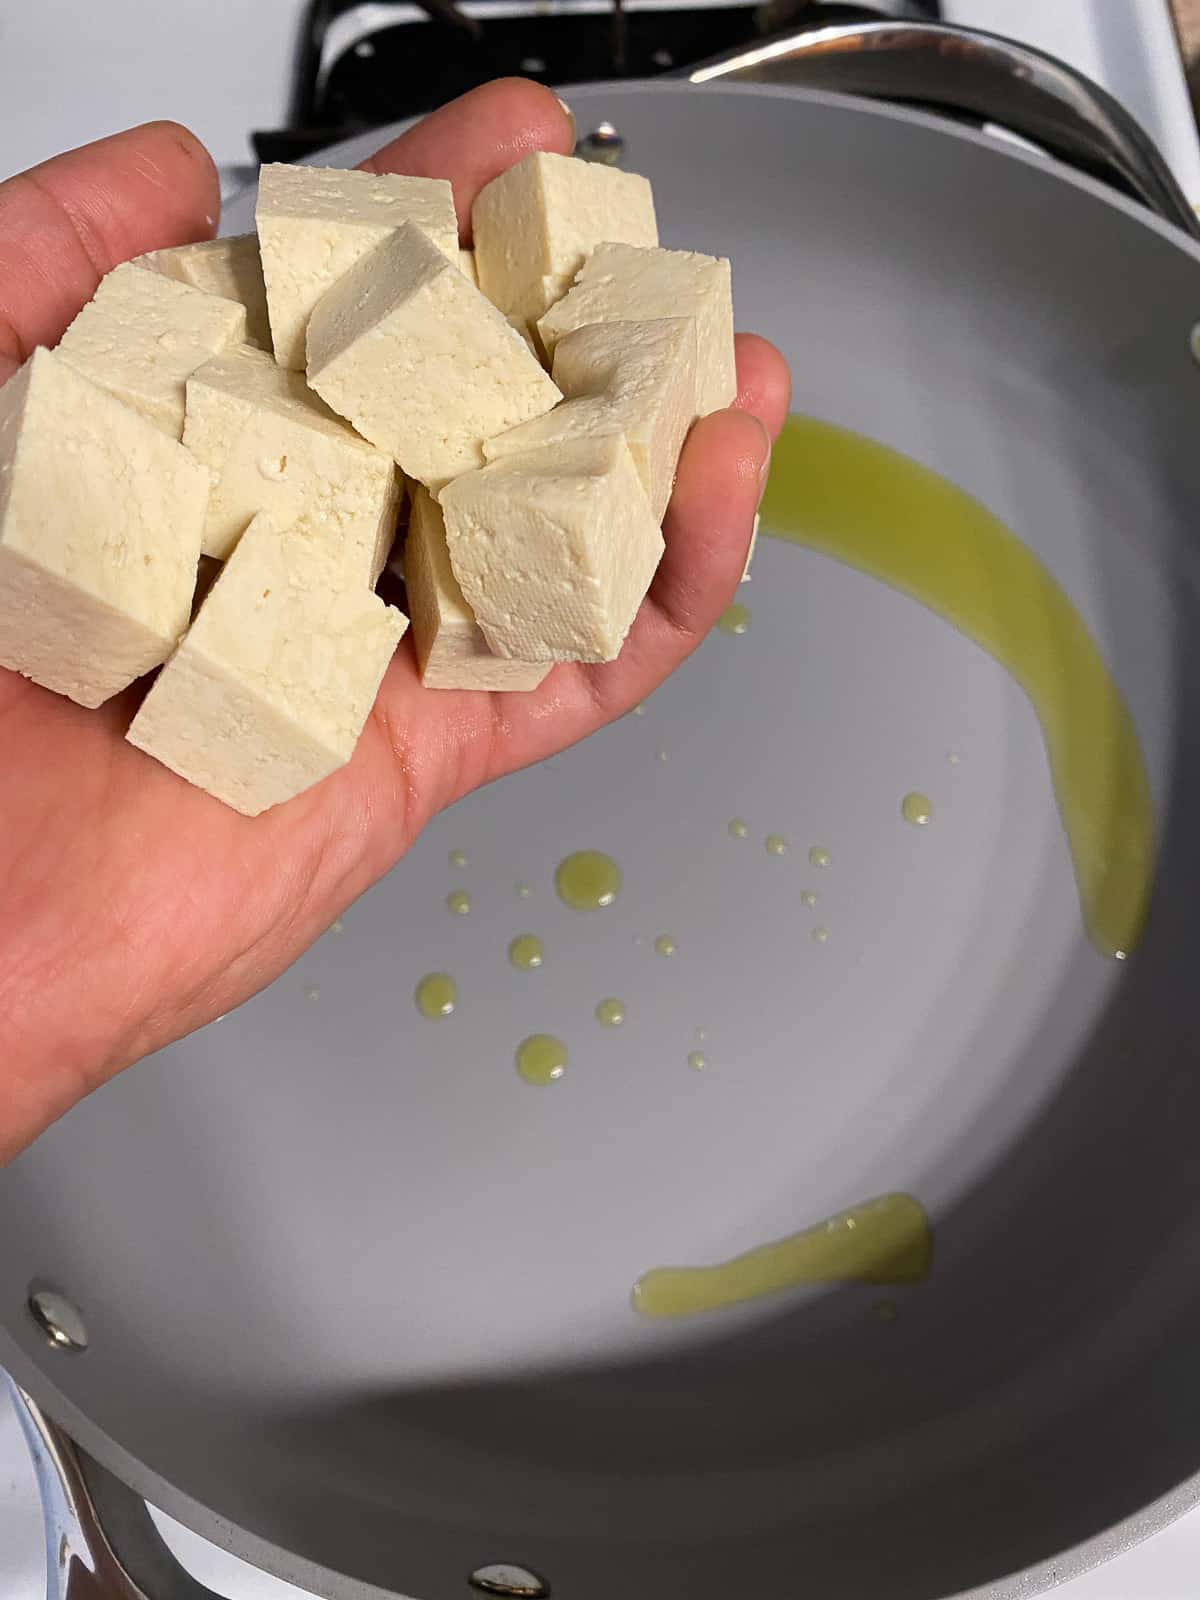 process of adding tofu to pan